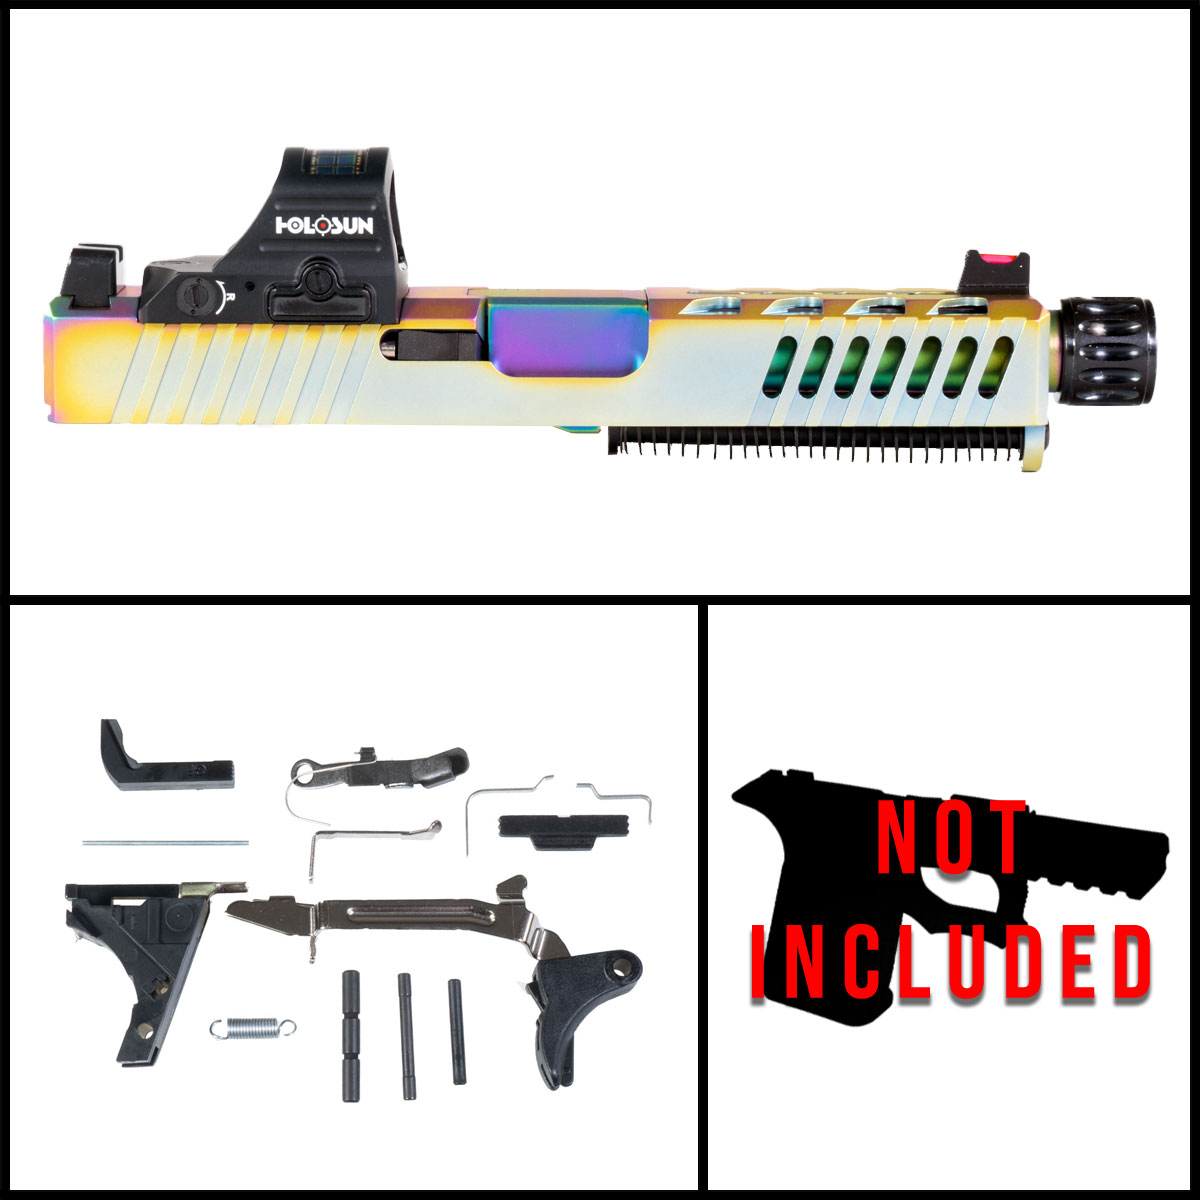 DTT 'Spectrum w/ HS507C-X2' 9mm Full Pistol Build Kits (Everything Minus Frame) - Glock 19 Gen 1-2 Compatible